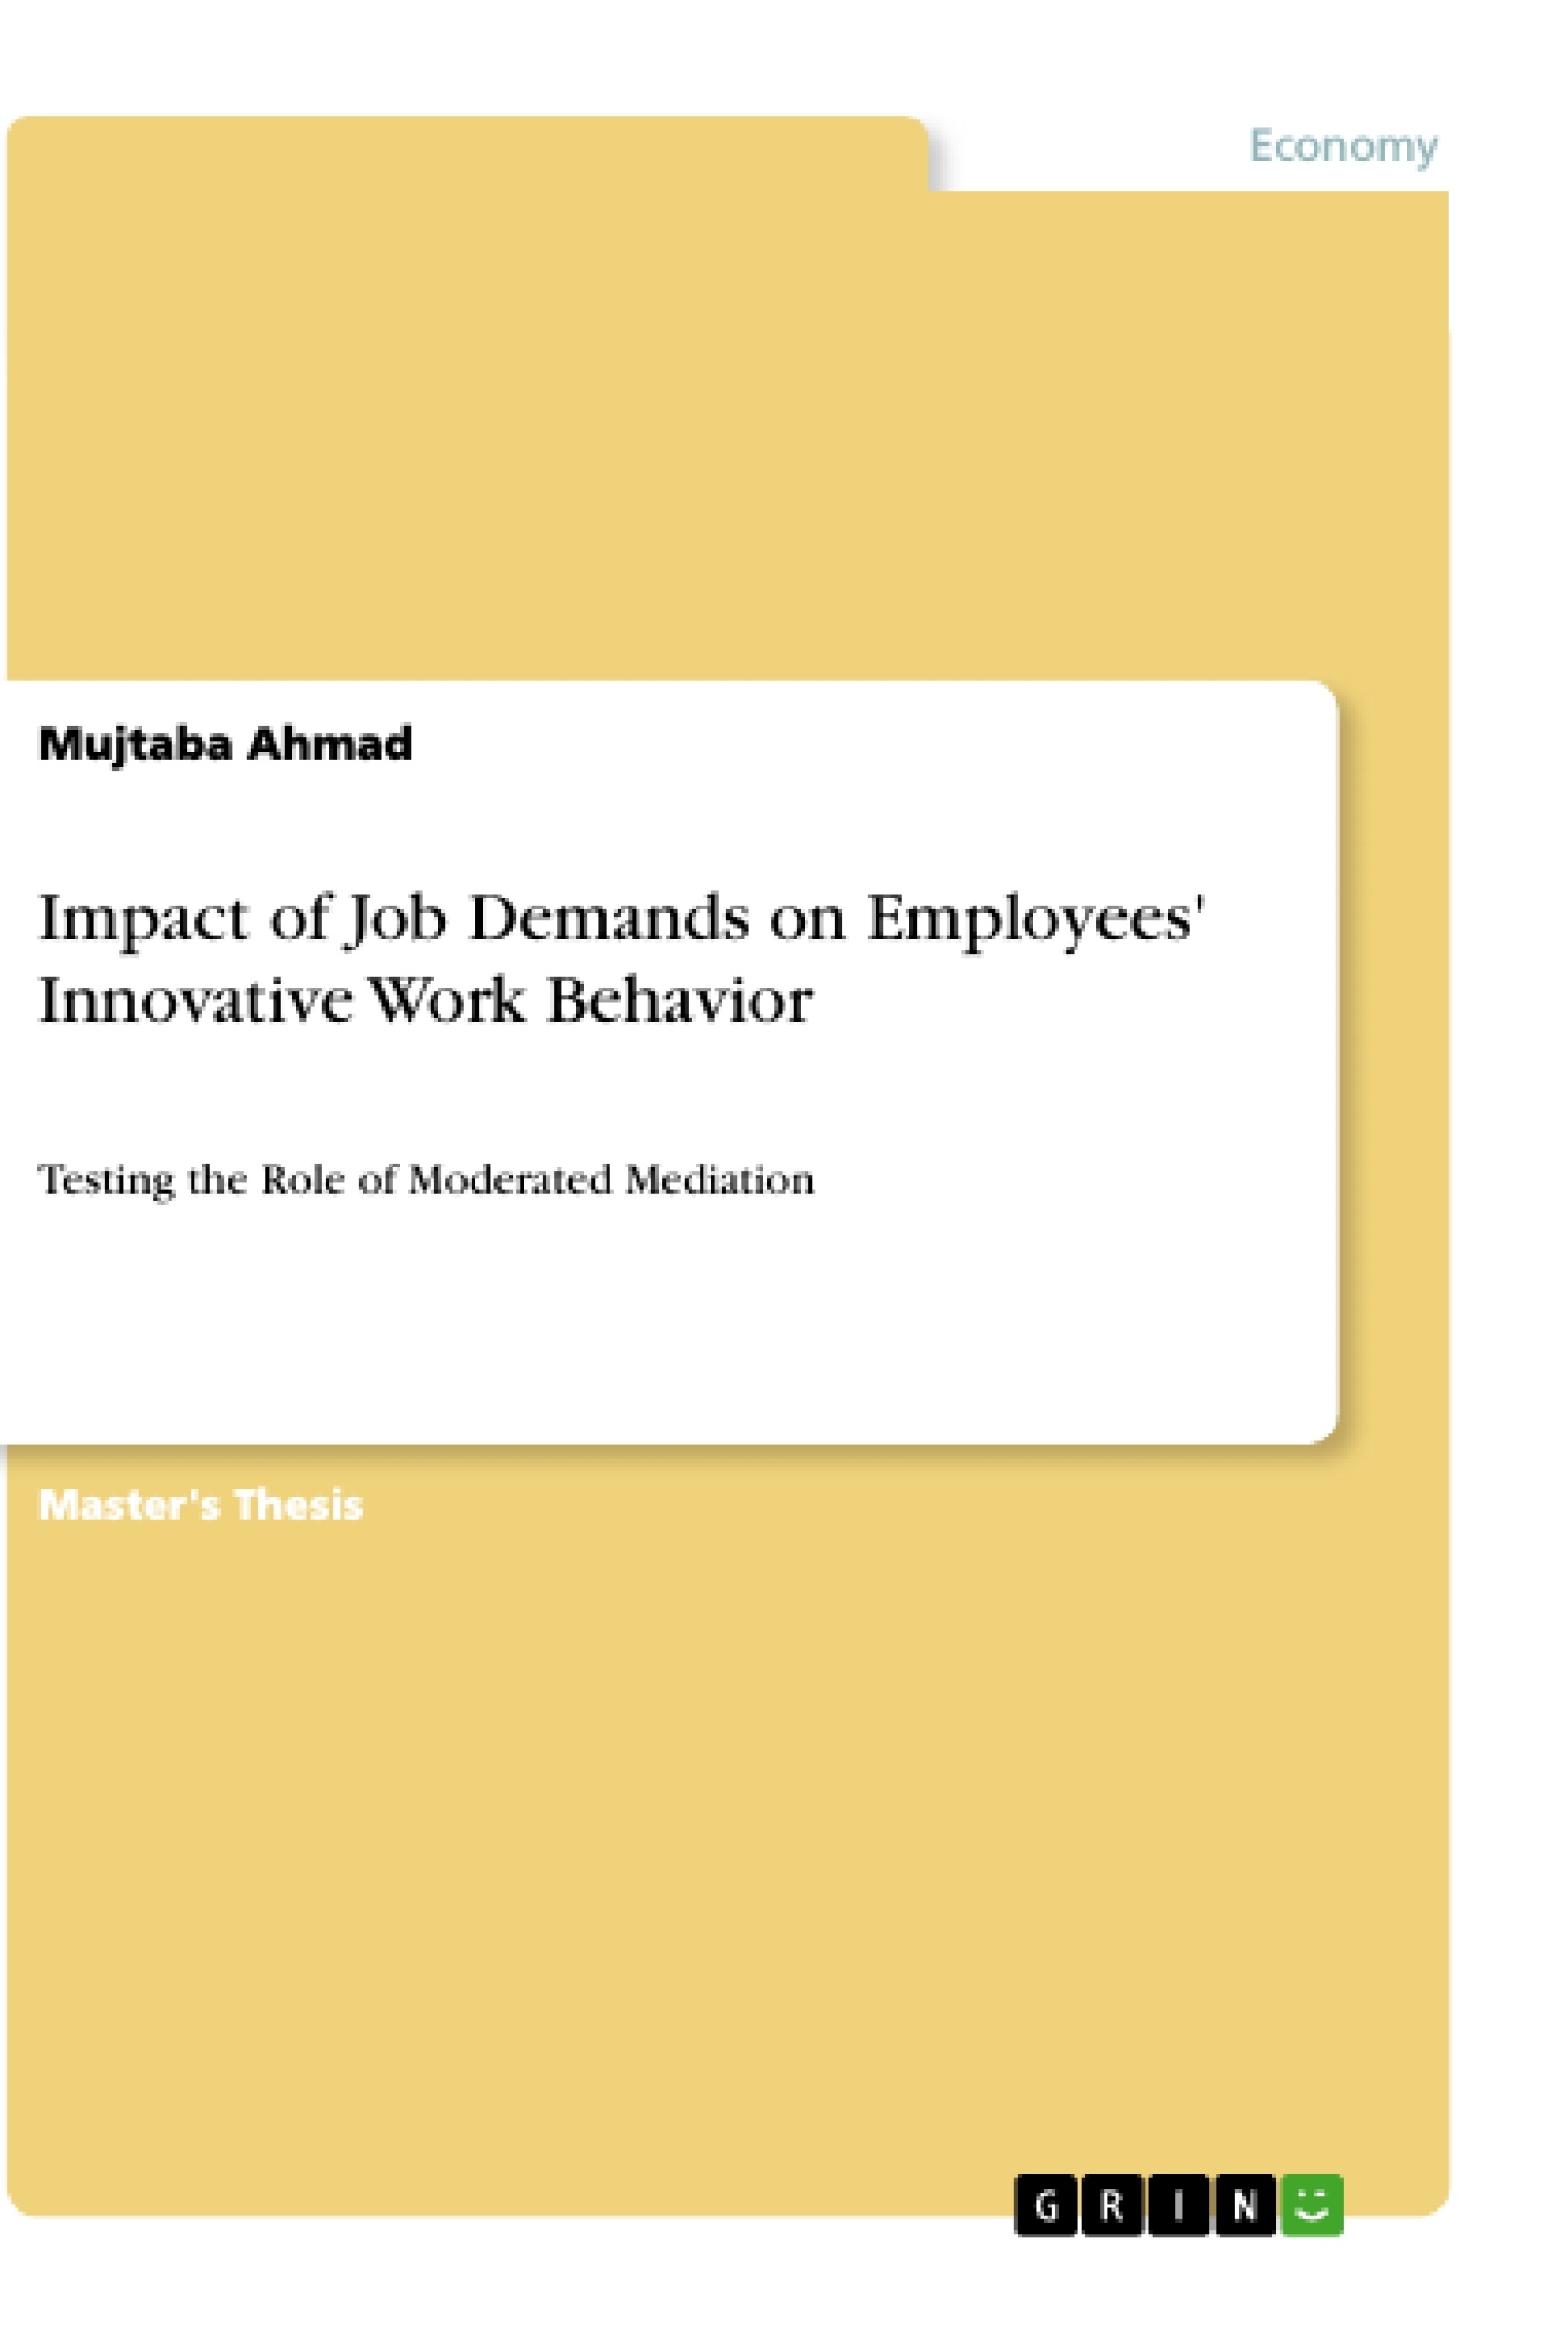 Title: Impact of Job Demands on Employees' Innovative Work Behavior